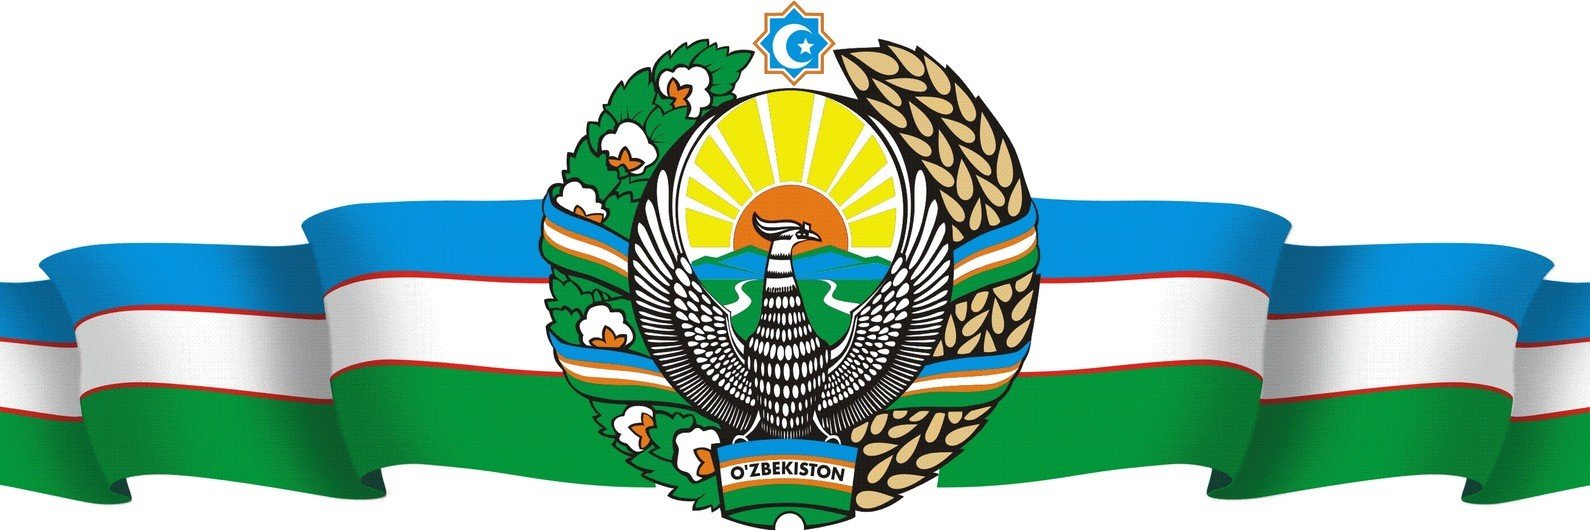 Узбекистан Республика БАЙРОГИ. Герб и флаг Узбекистана. Уз флаг Узбекистана.